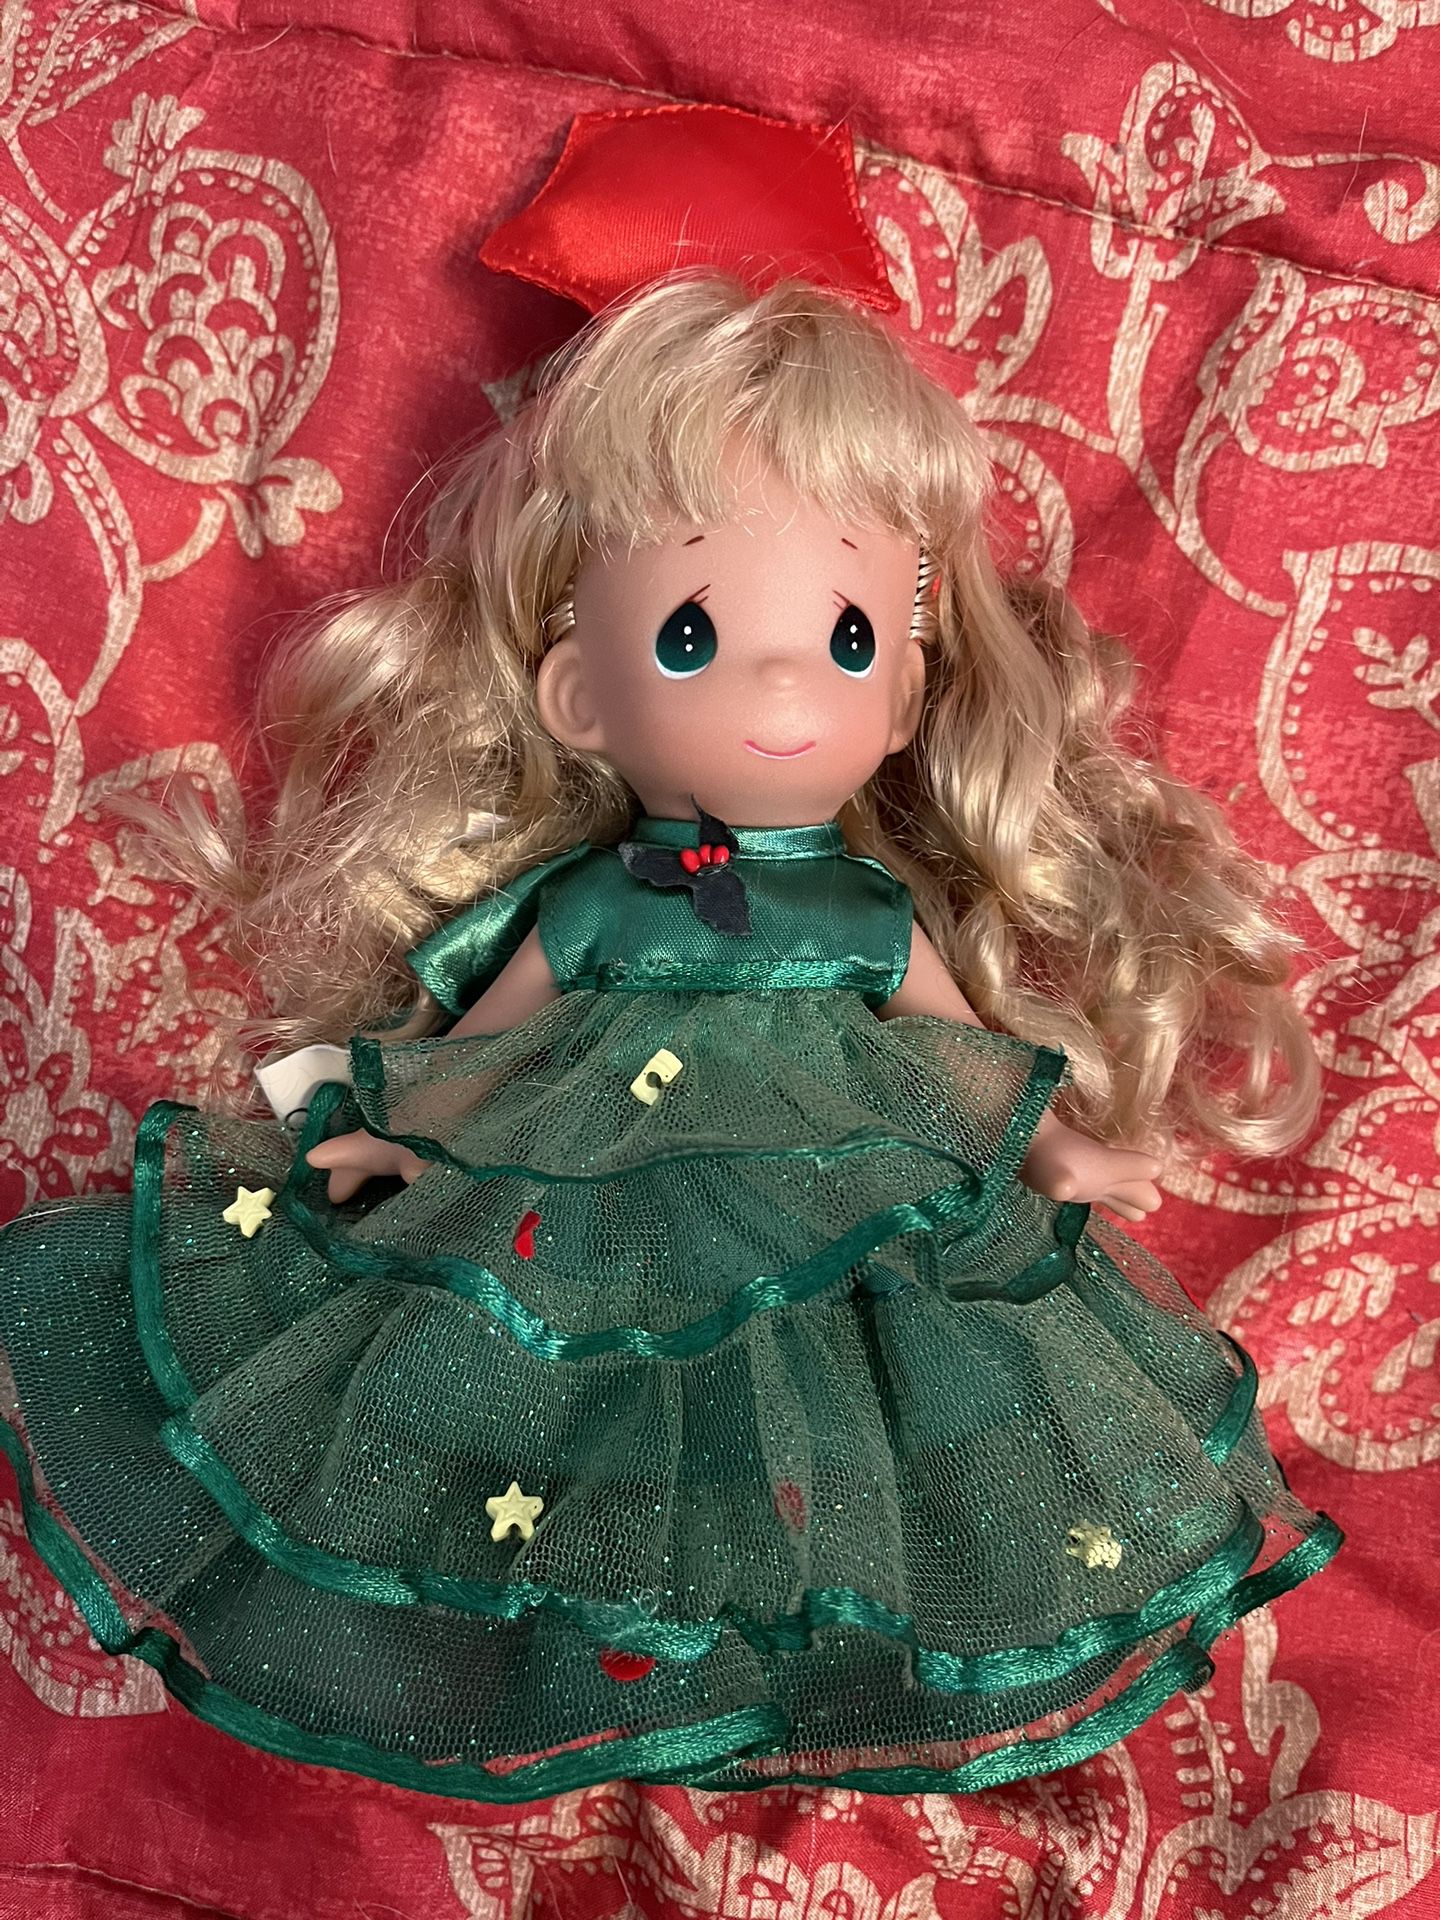 Precious Moment’s Christmas Doll